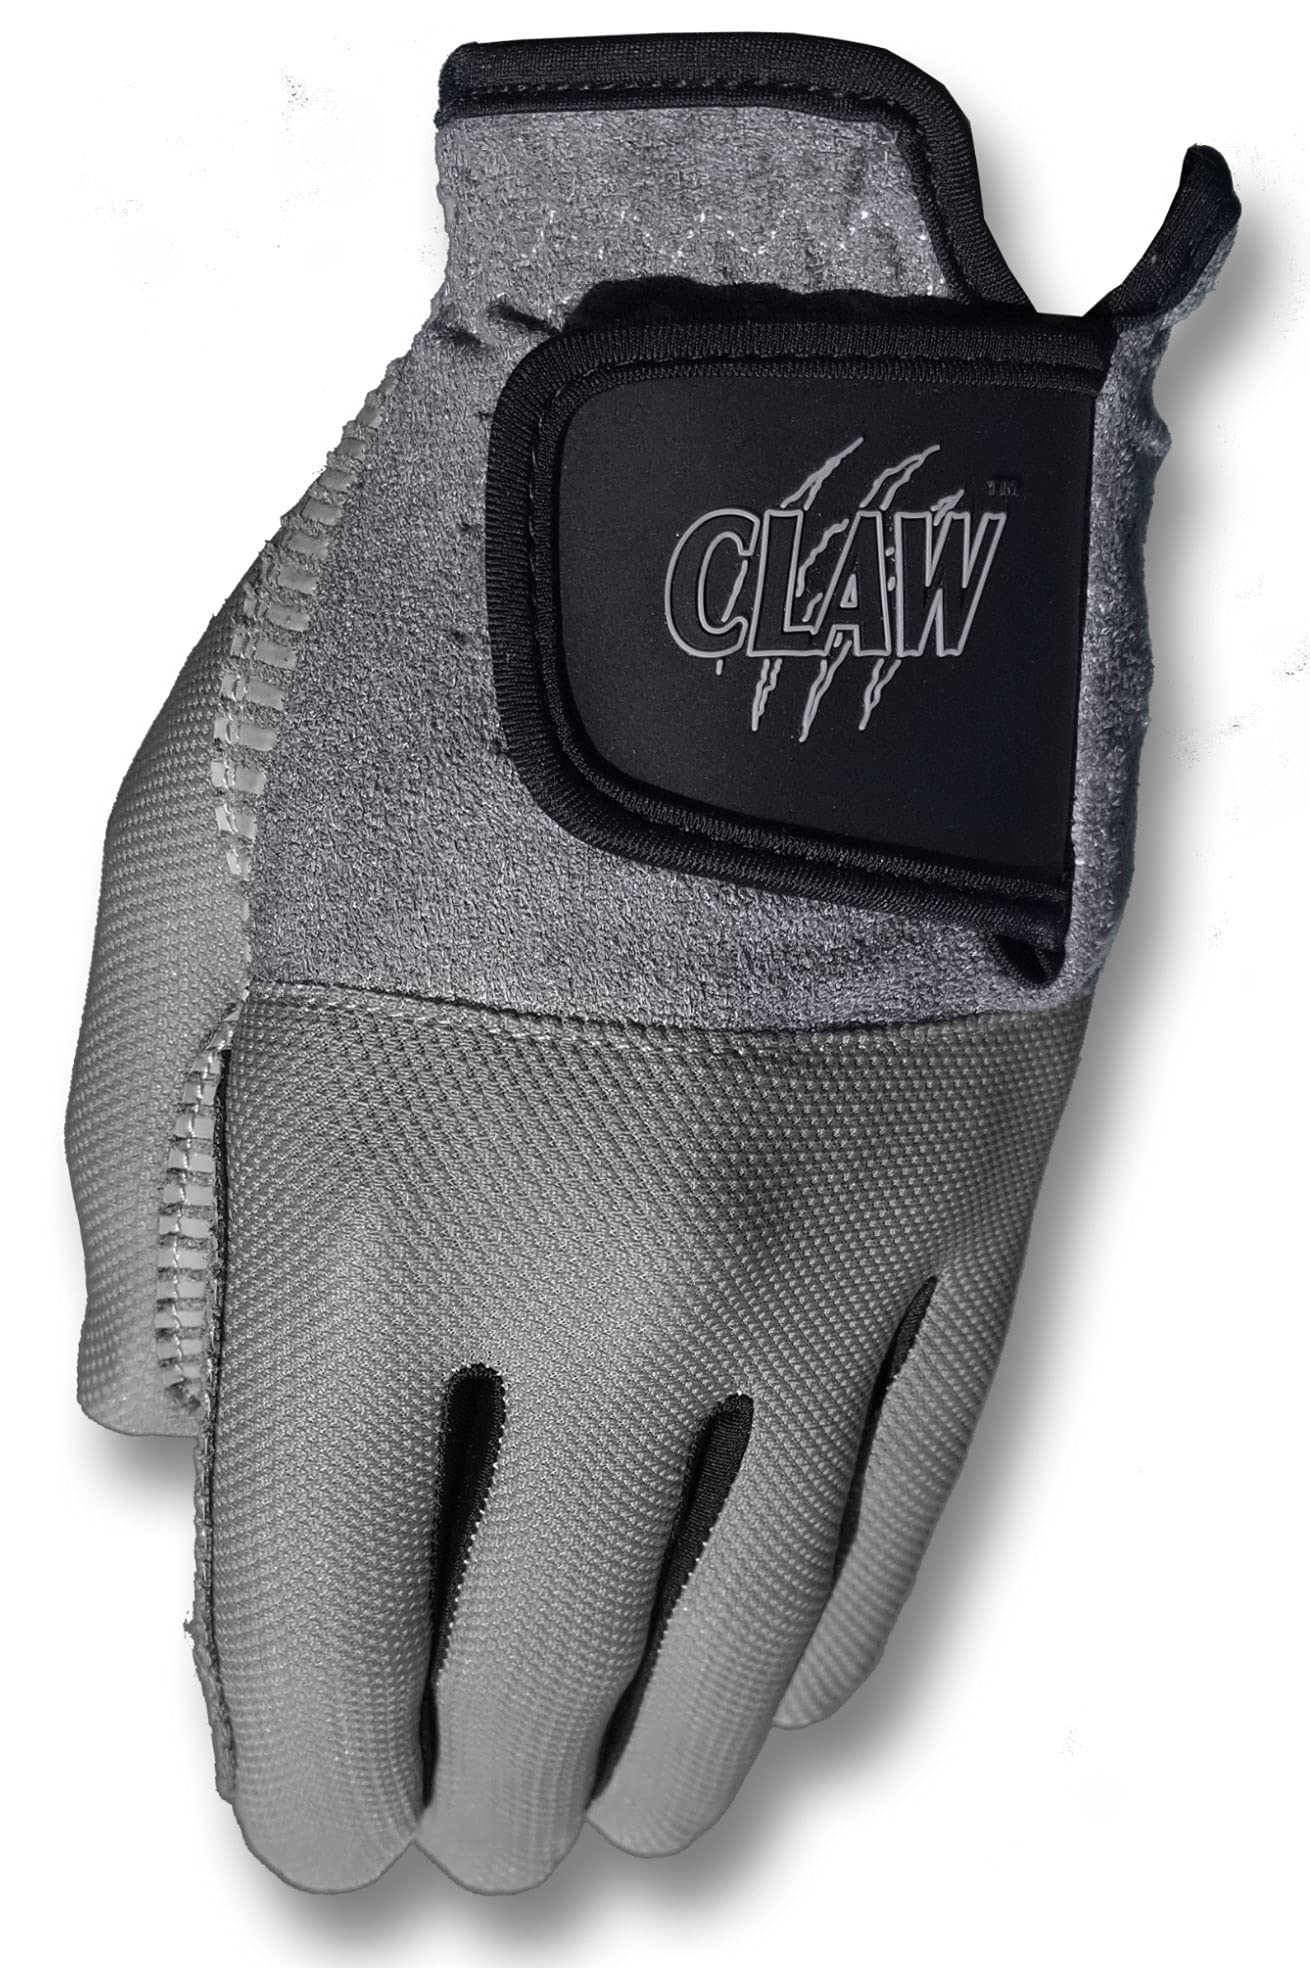 Caddydaddy Claw Pro Menas Golf Glove - Breathable, Long Lasting (Grey, Xx-Large, Worn On Left Hand)